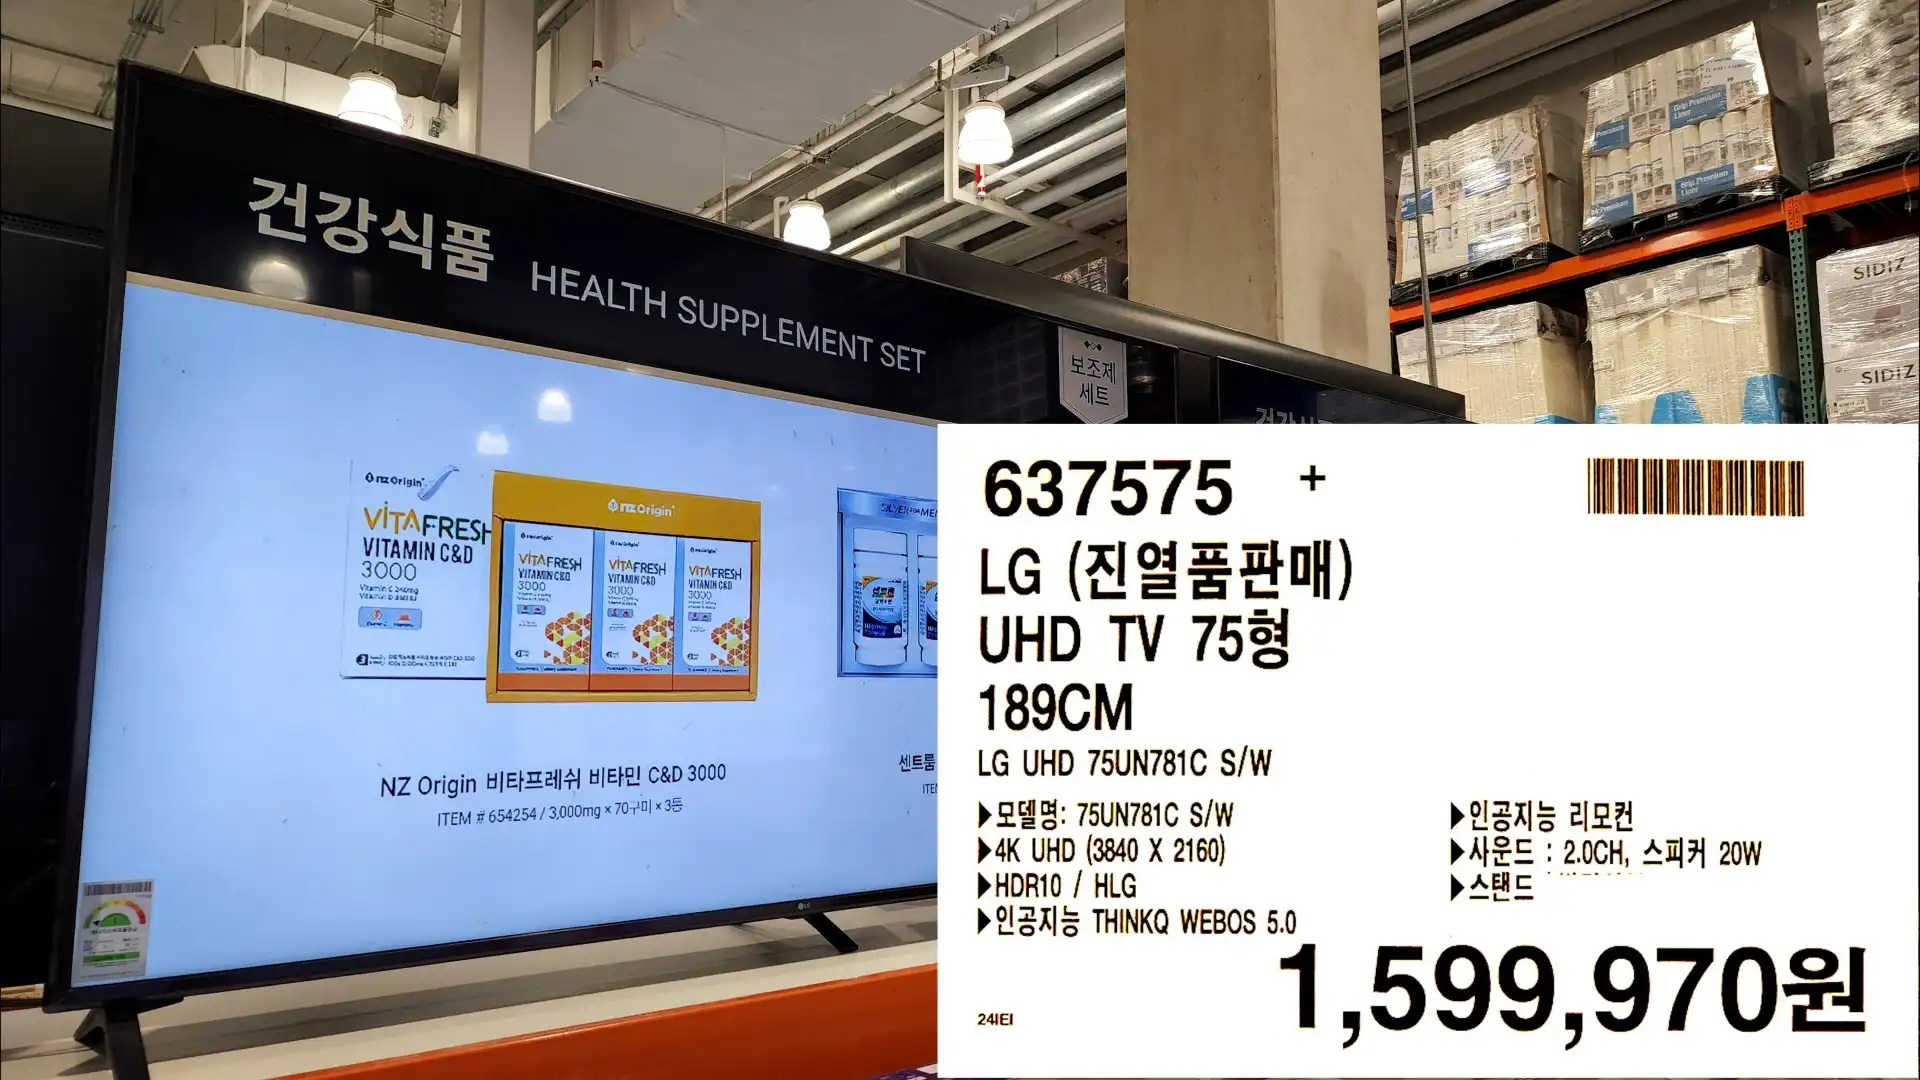 LG (진열품판매)
UHD TV 75형
189CM
LG UHD 75UN781C S/W
4K UHD (3840 X 2160)
▶HDR10 / HLG
▶인공지능 THINKQ WEBOS 5.0
▶ 인공지능 리모컨
▶사운드: 2.0CH&#44; 스피커 20W
▶스탠드
1&#44;599&#44;970원